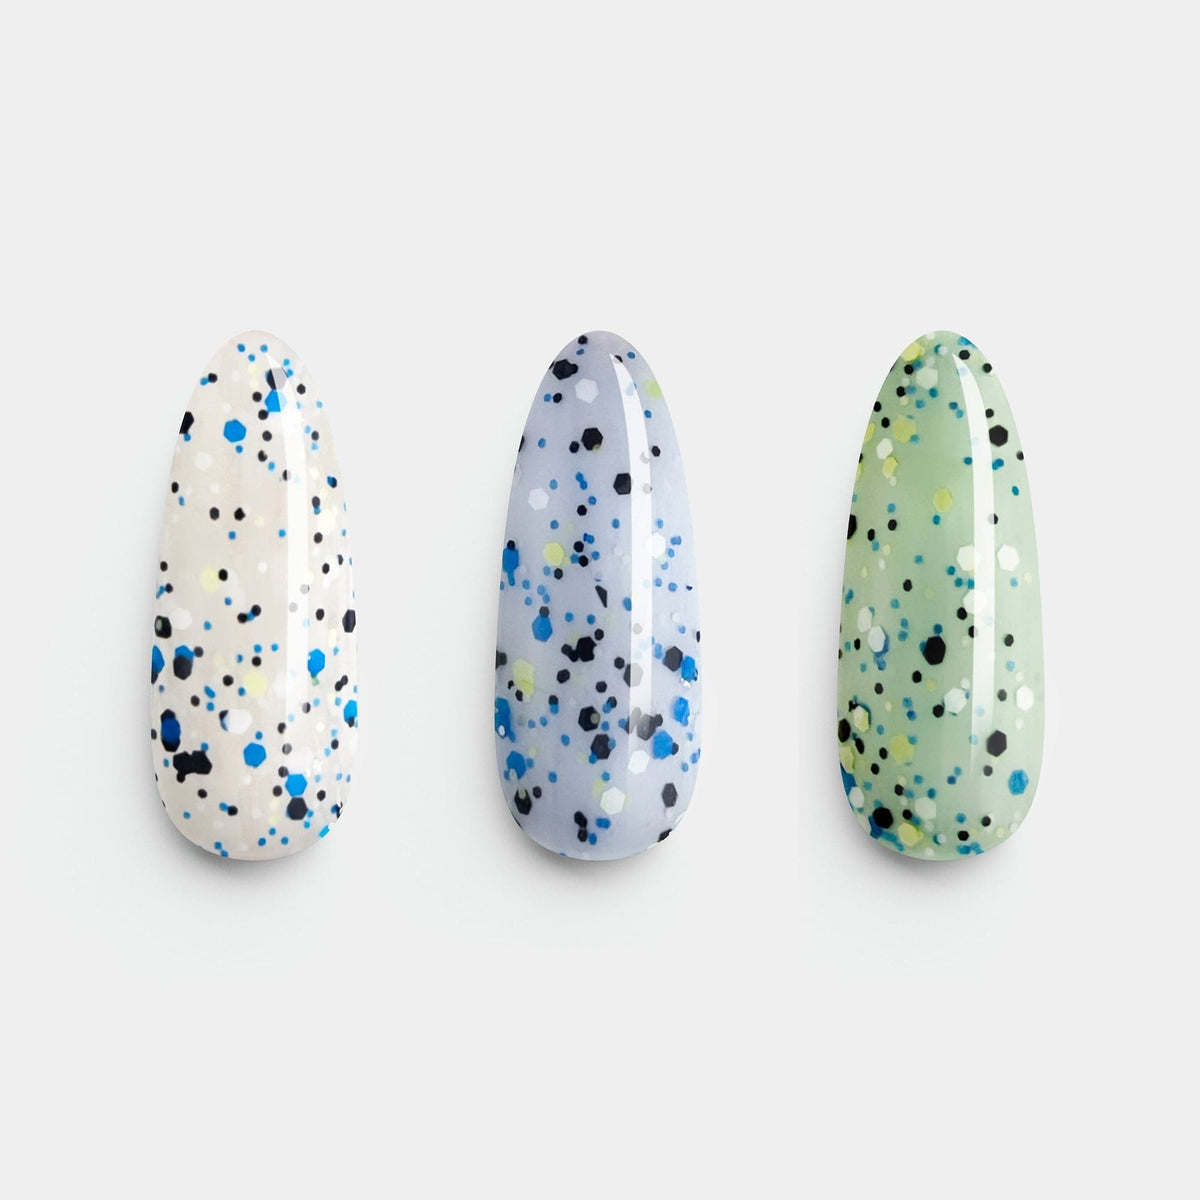 Gelous Pop Top Coat gel nail polish swatch - photographed in Australia